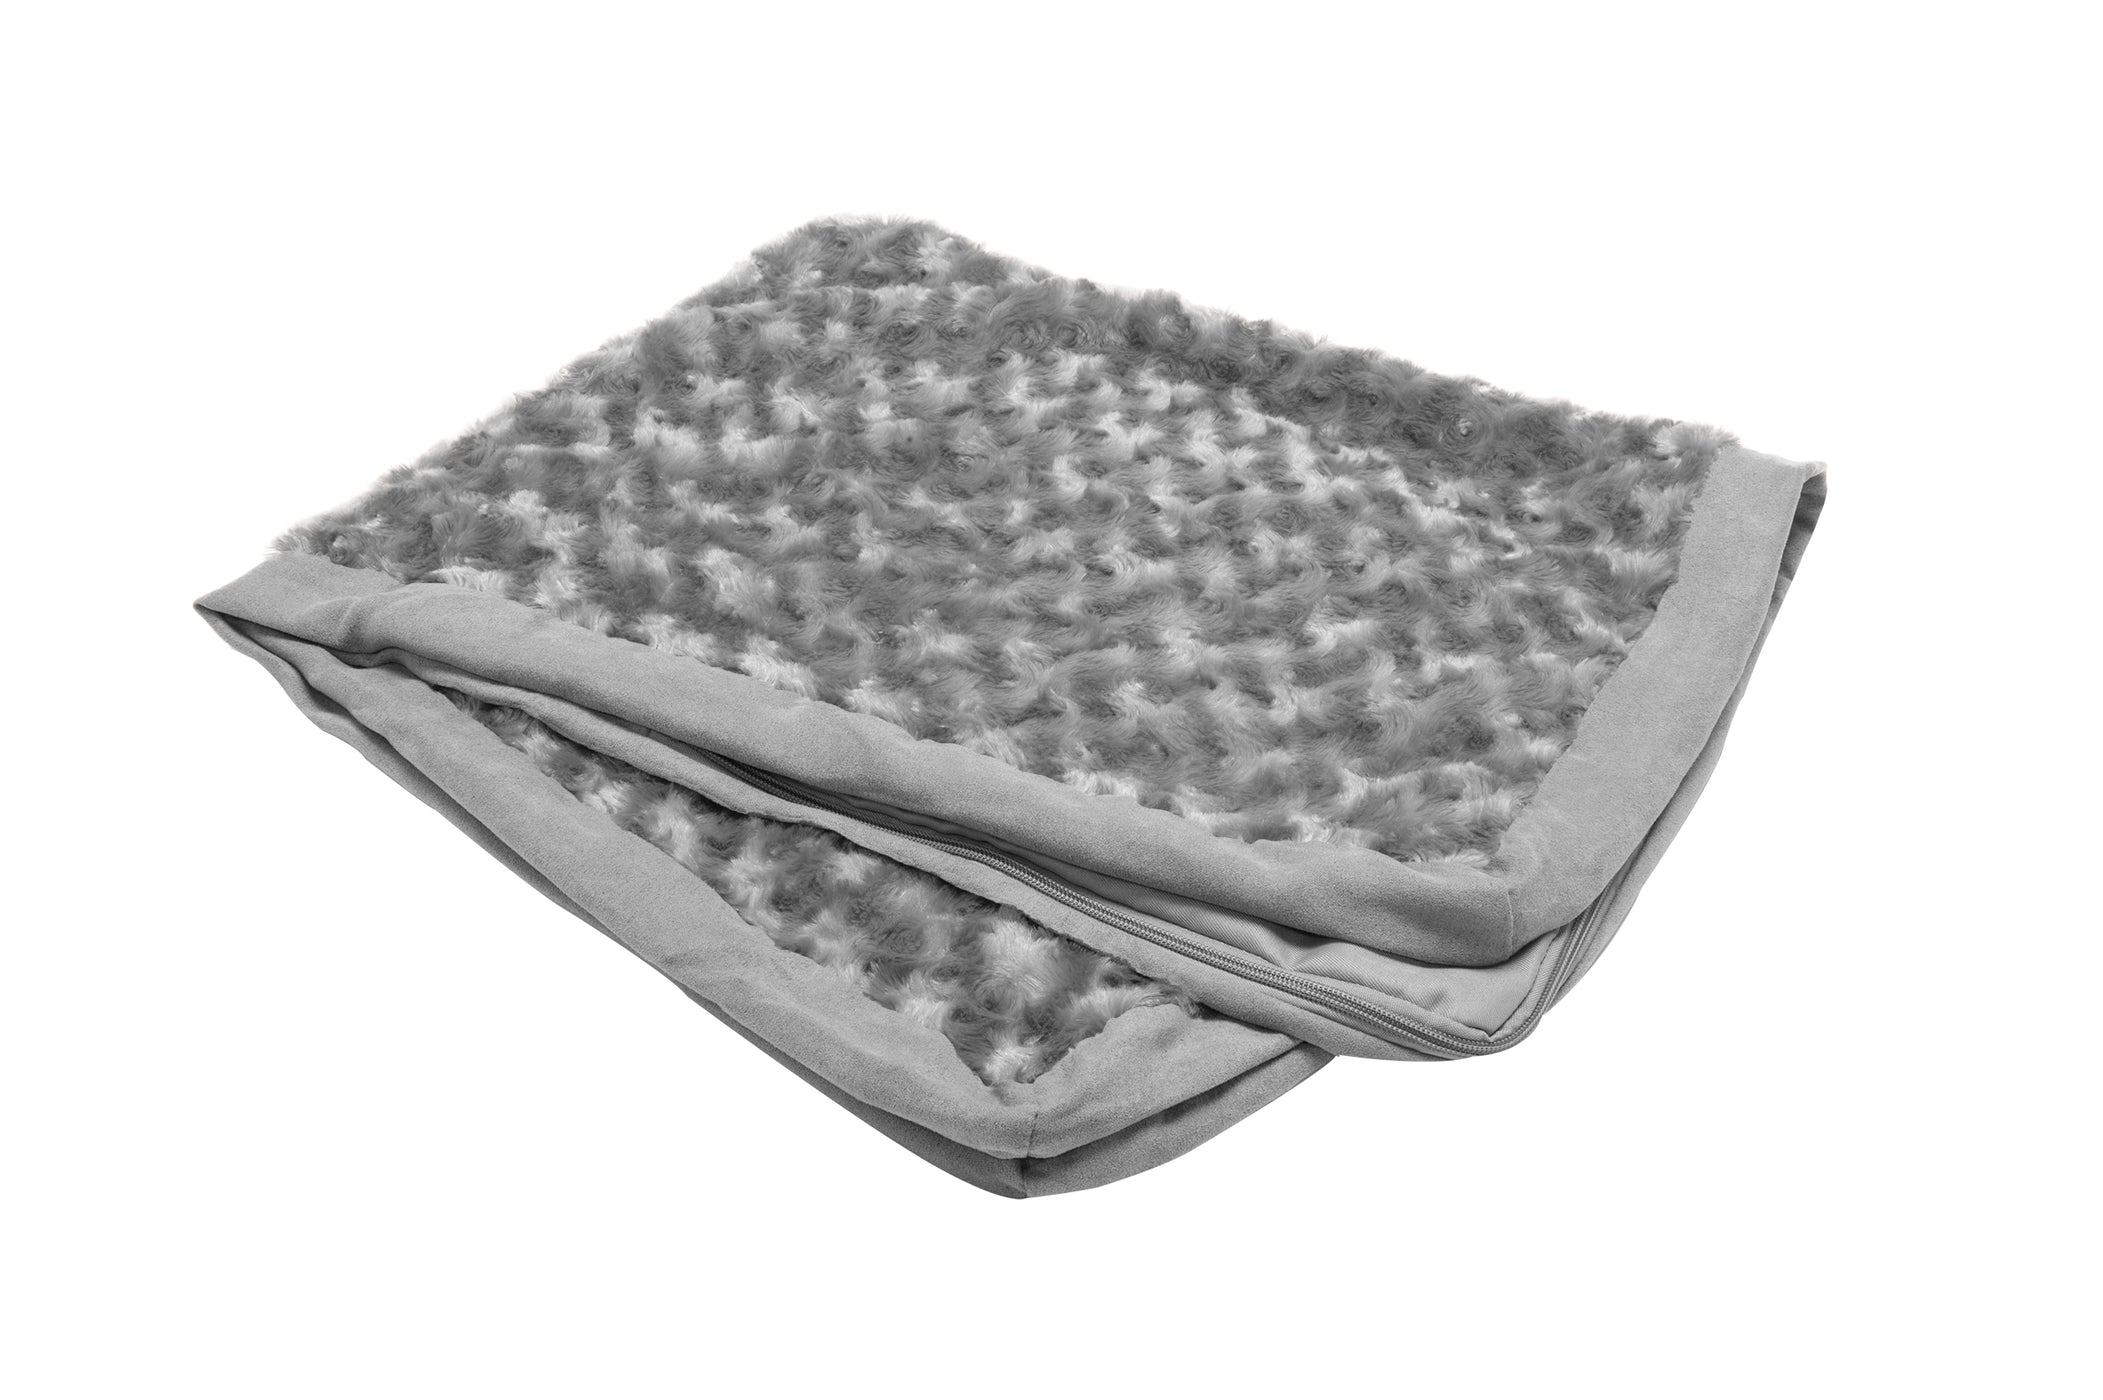 ultra plush mattress cover